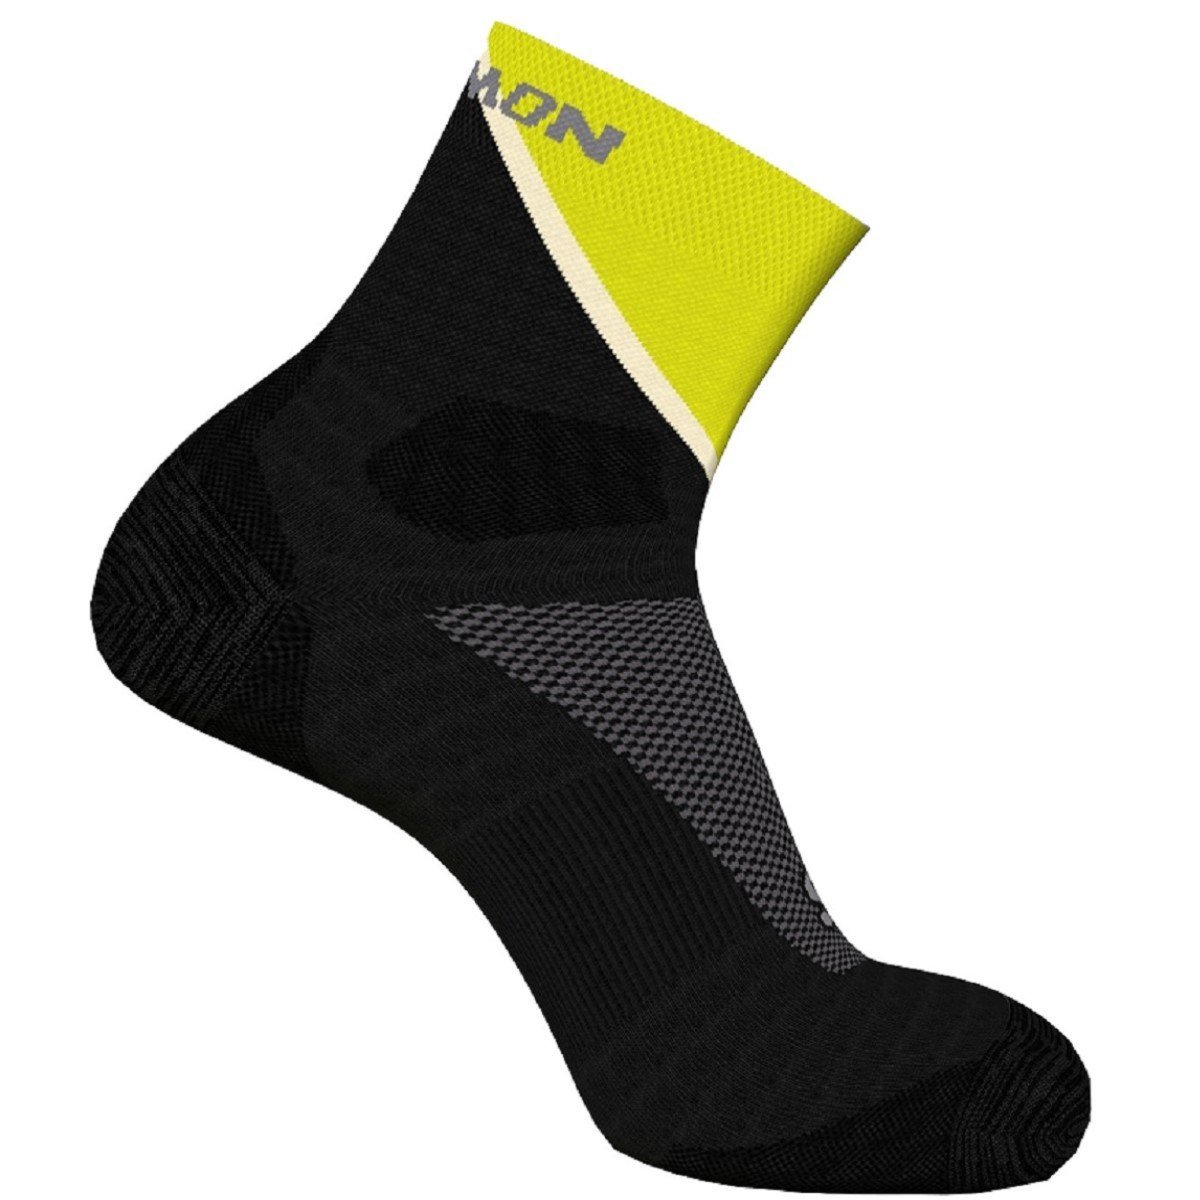 Ponožky Salomon Pulse Ankle Socks - čierne/žlté